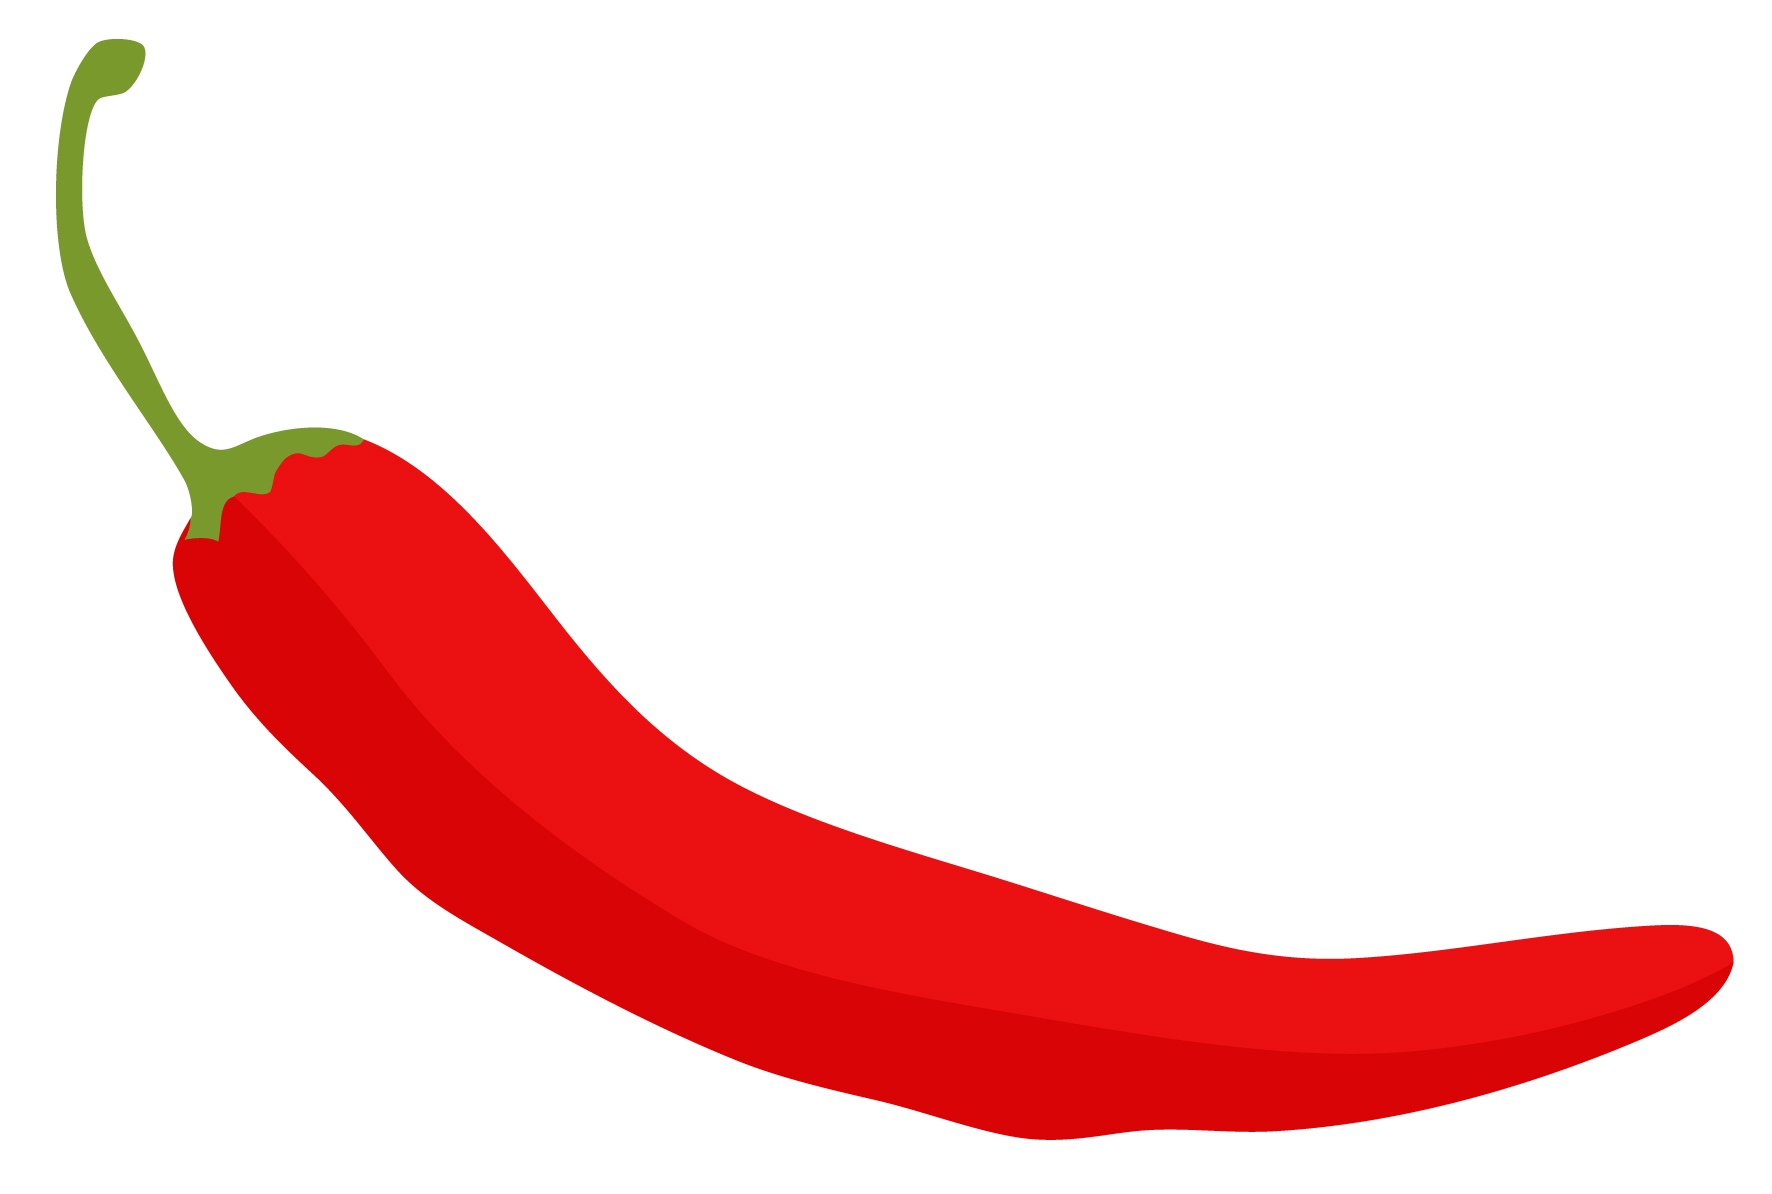 Red and green hot chili chara